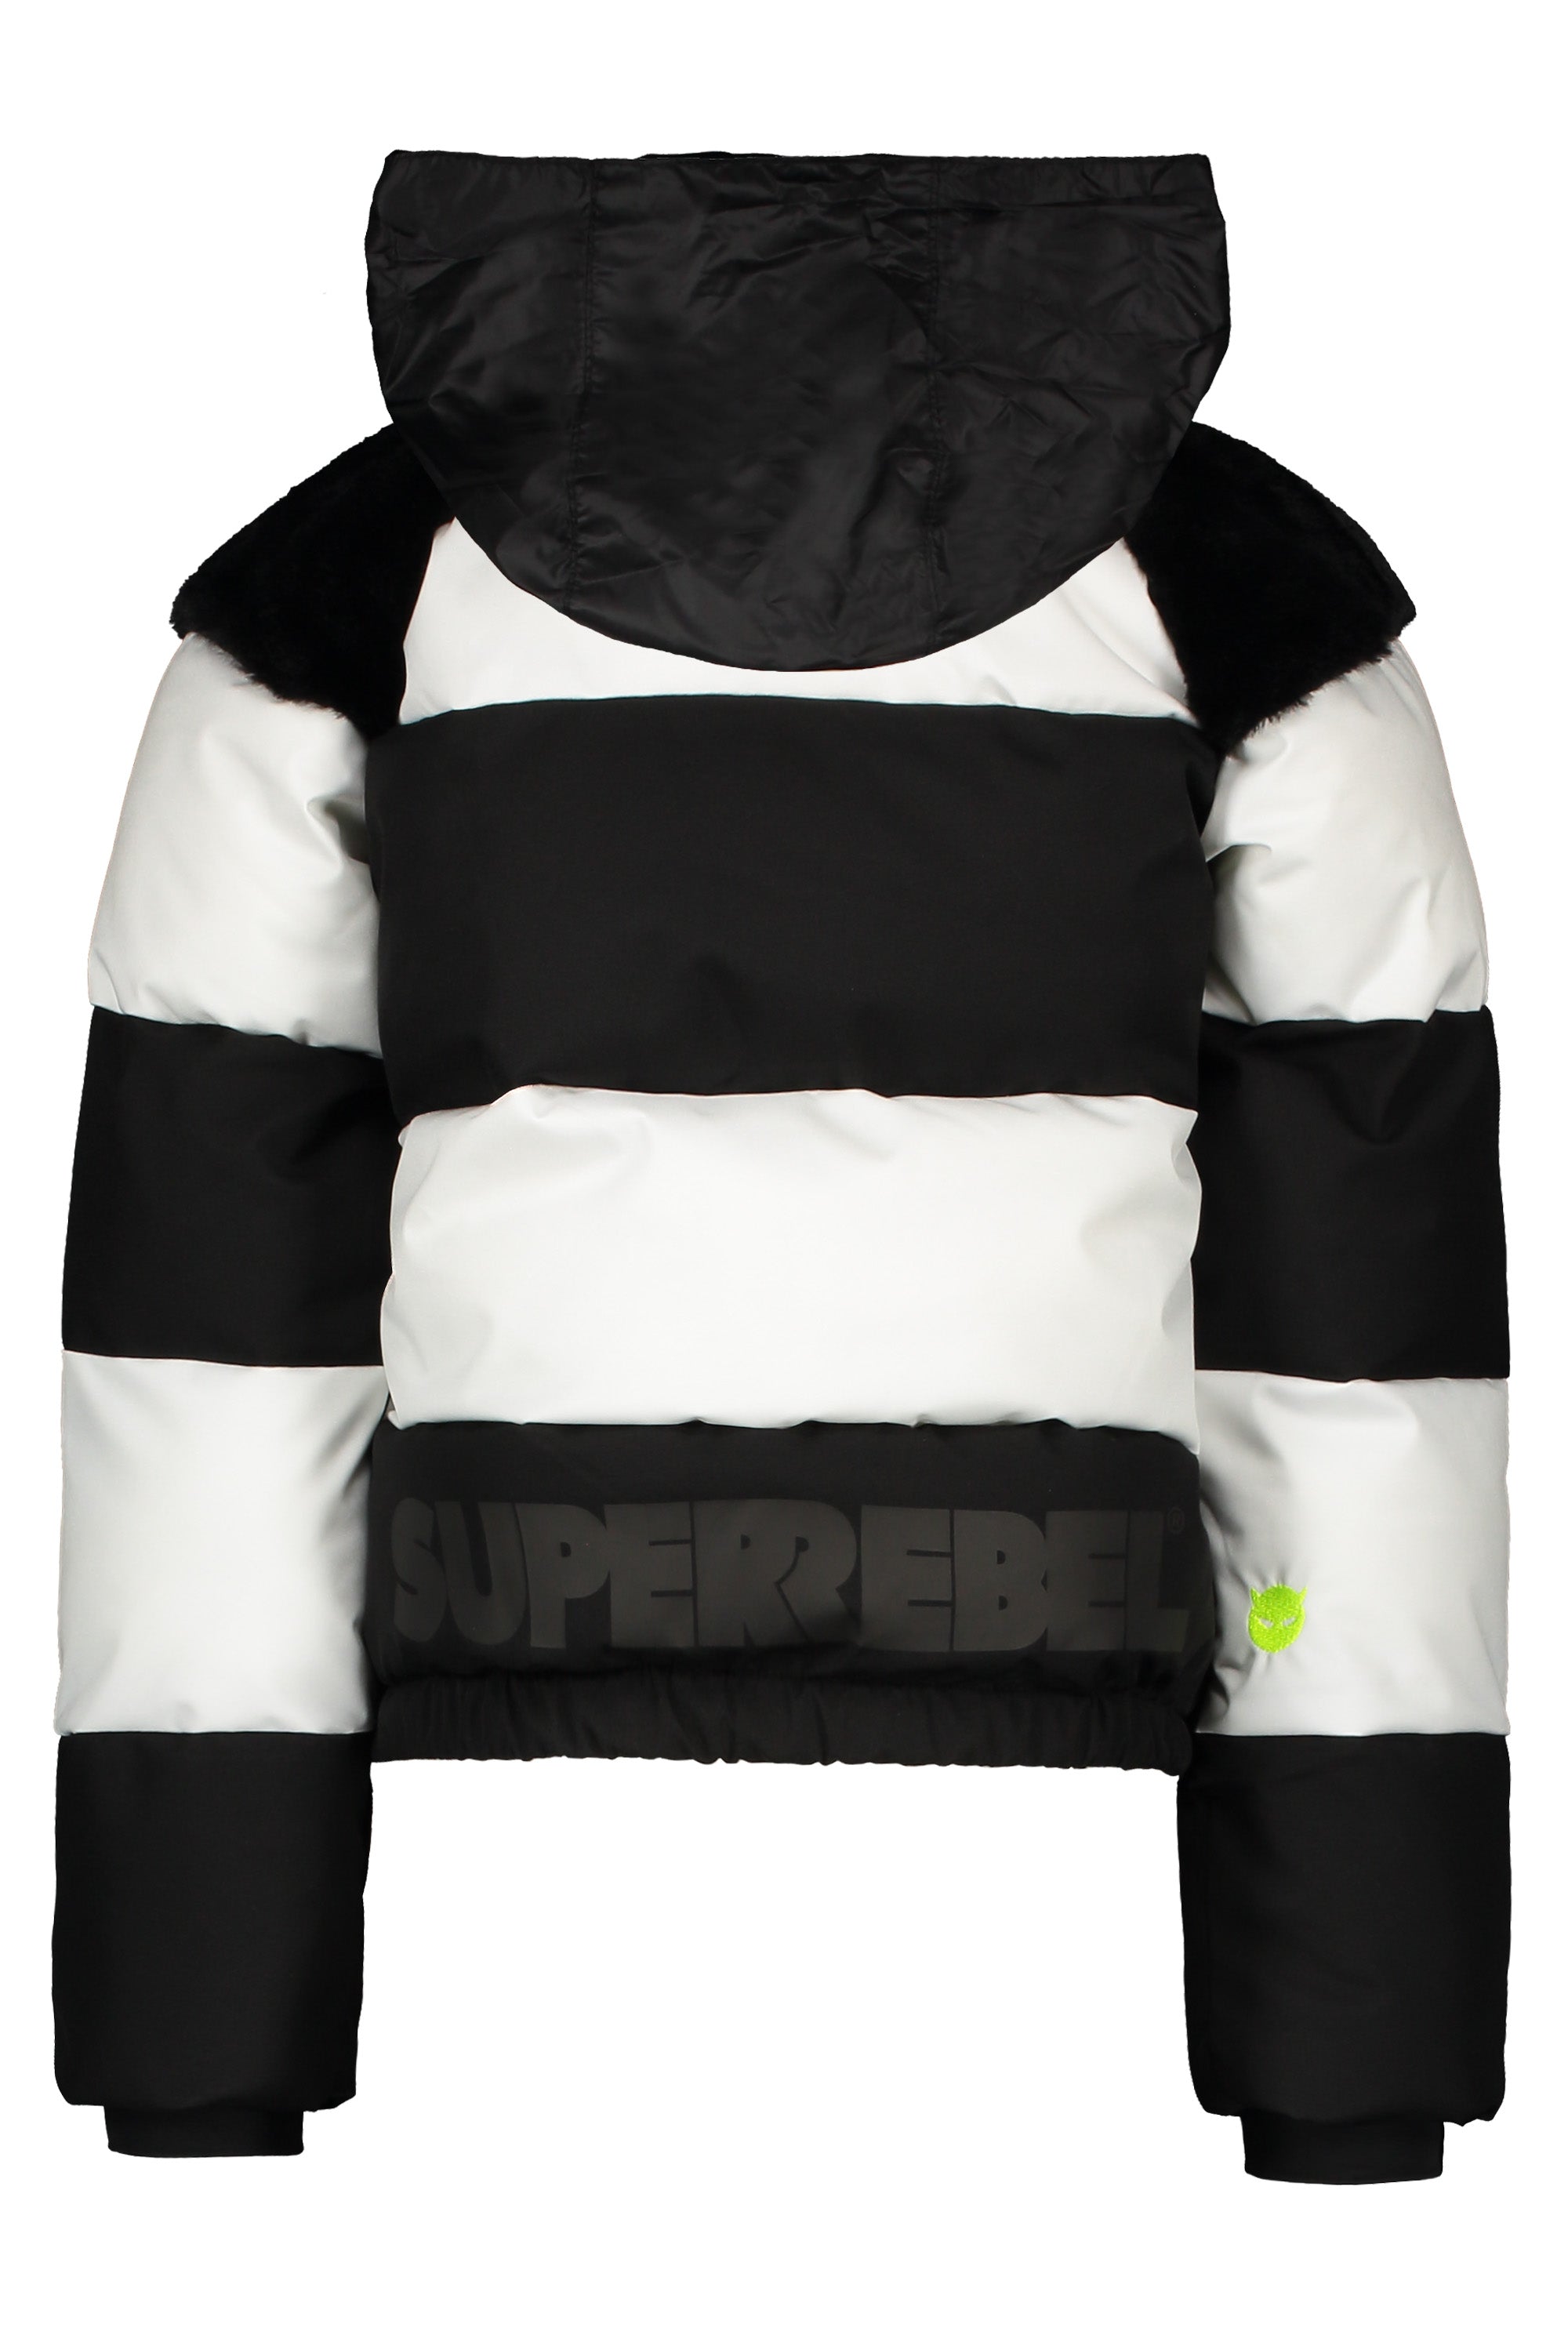 Super Rebel Winterjacket STACK Black/White